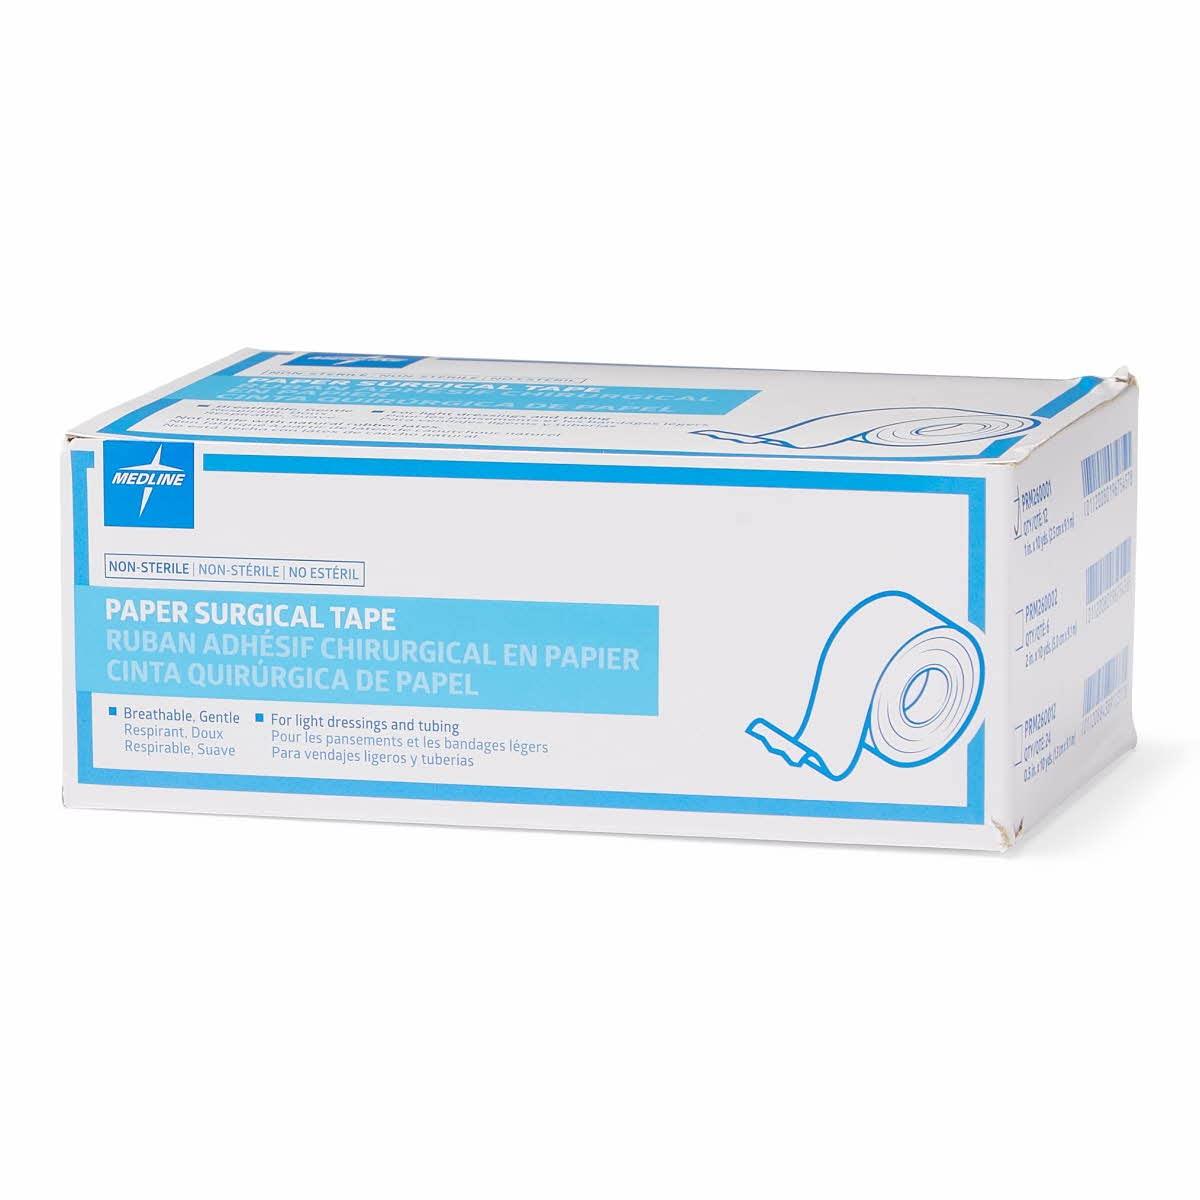 Medline Essentials Paper Medical Tape 1in x 10yd 1Ct